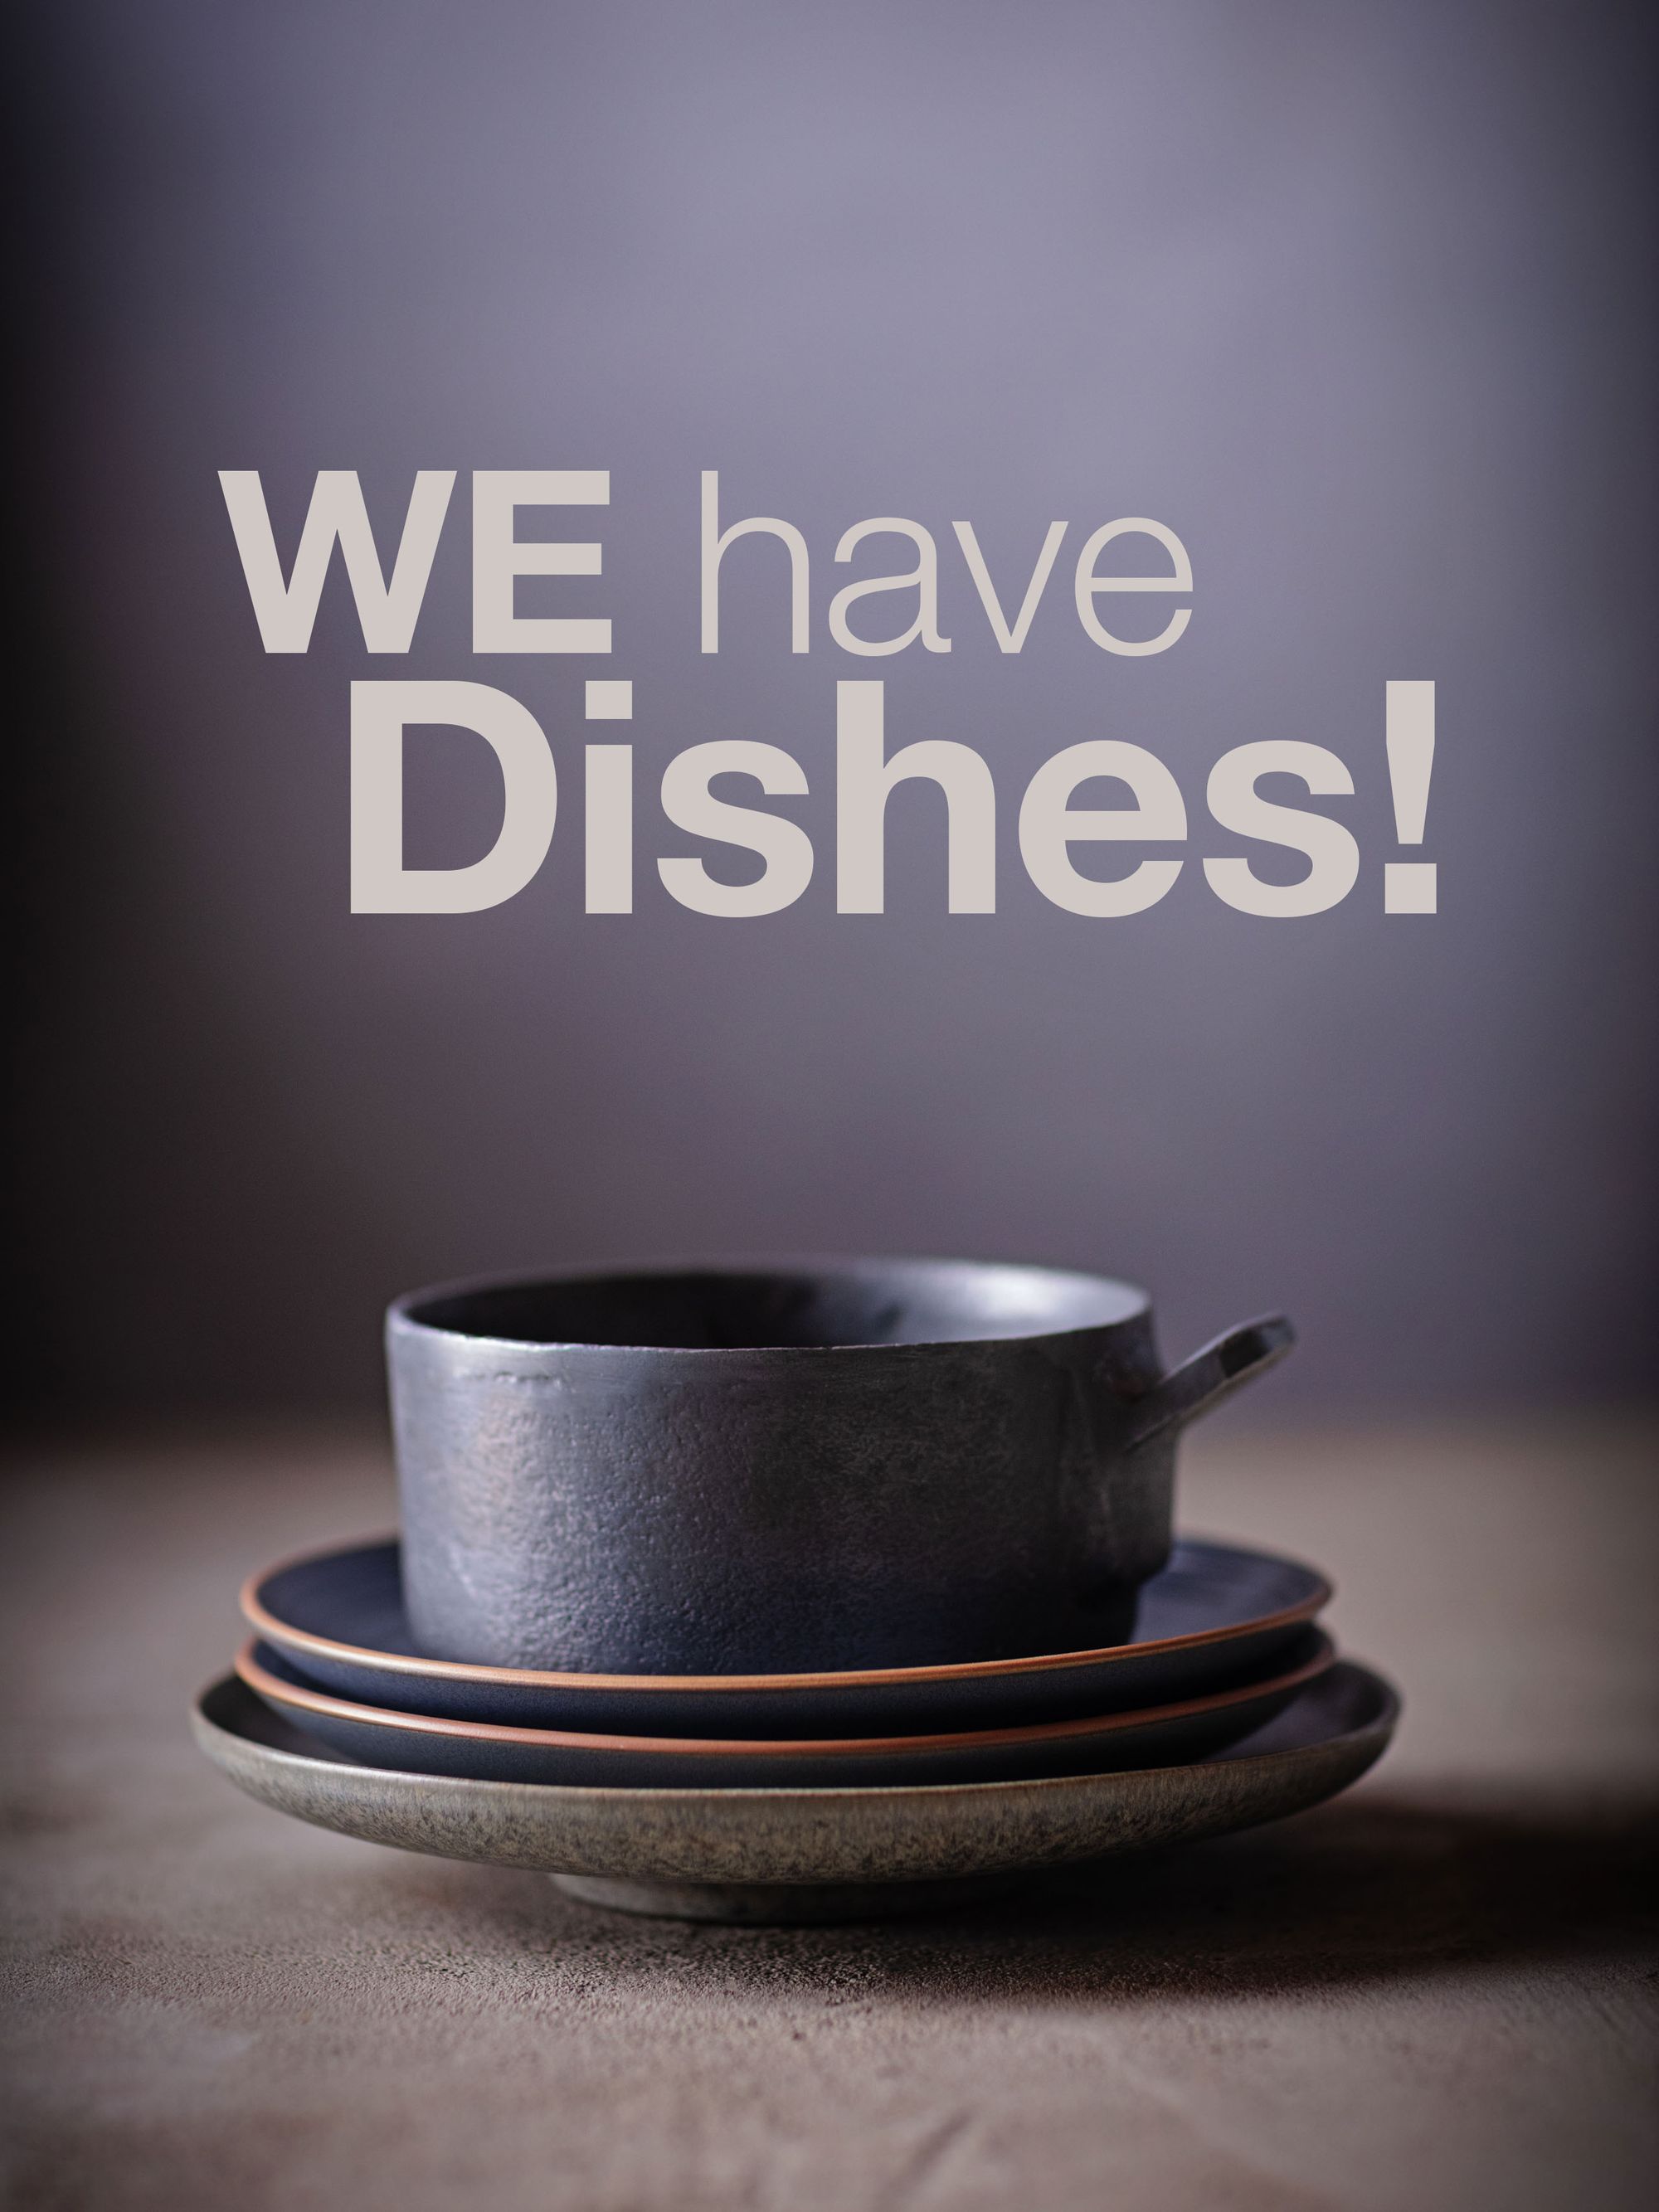 Dishes1RET.jpg